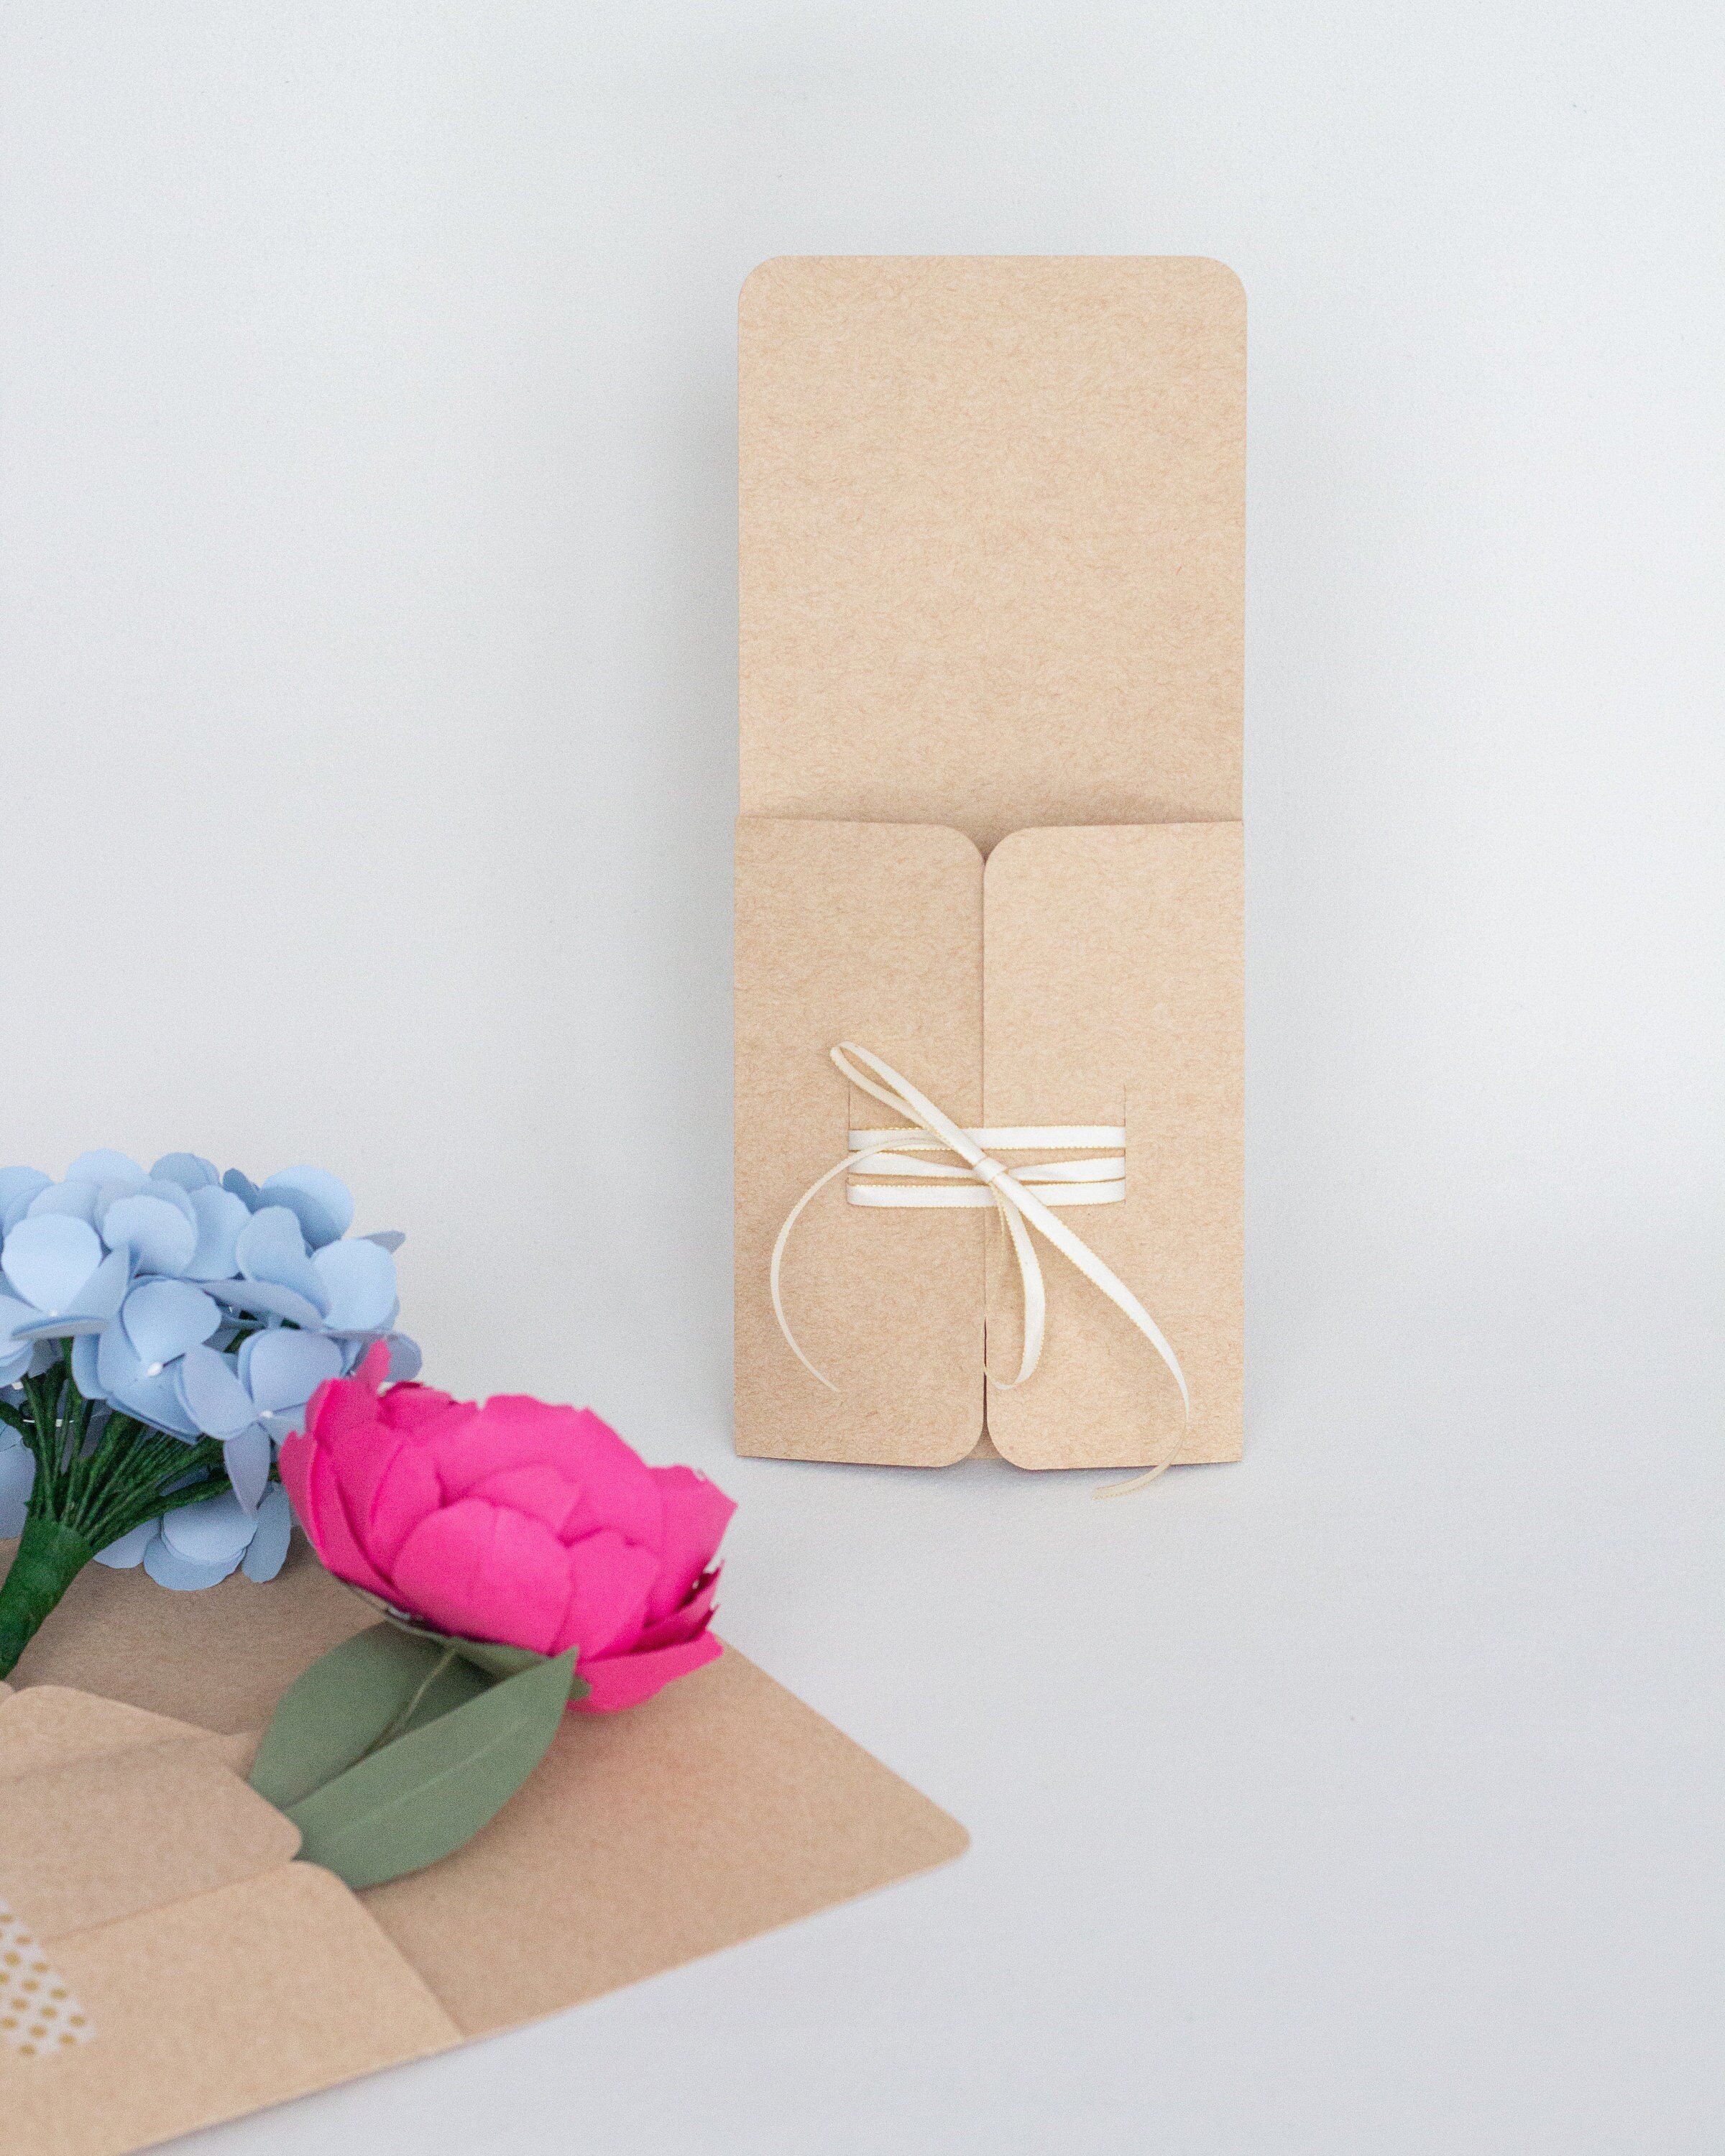 Paper Flower Holder Envelope Mini Online Workshop for Cricut and Silhouette  Includes SVG Studio3 Templates Video Tutorials Material List (Instant  Download) - Et…